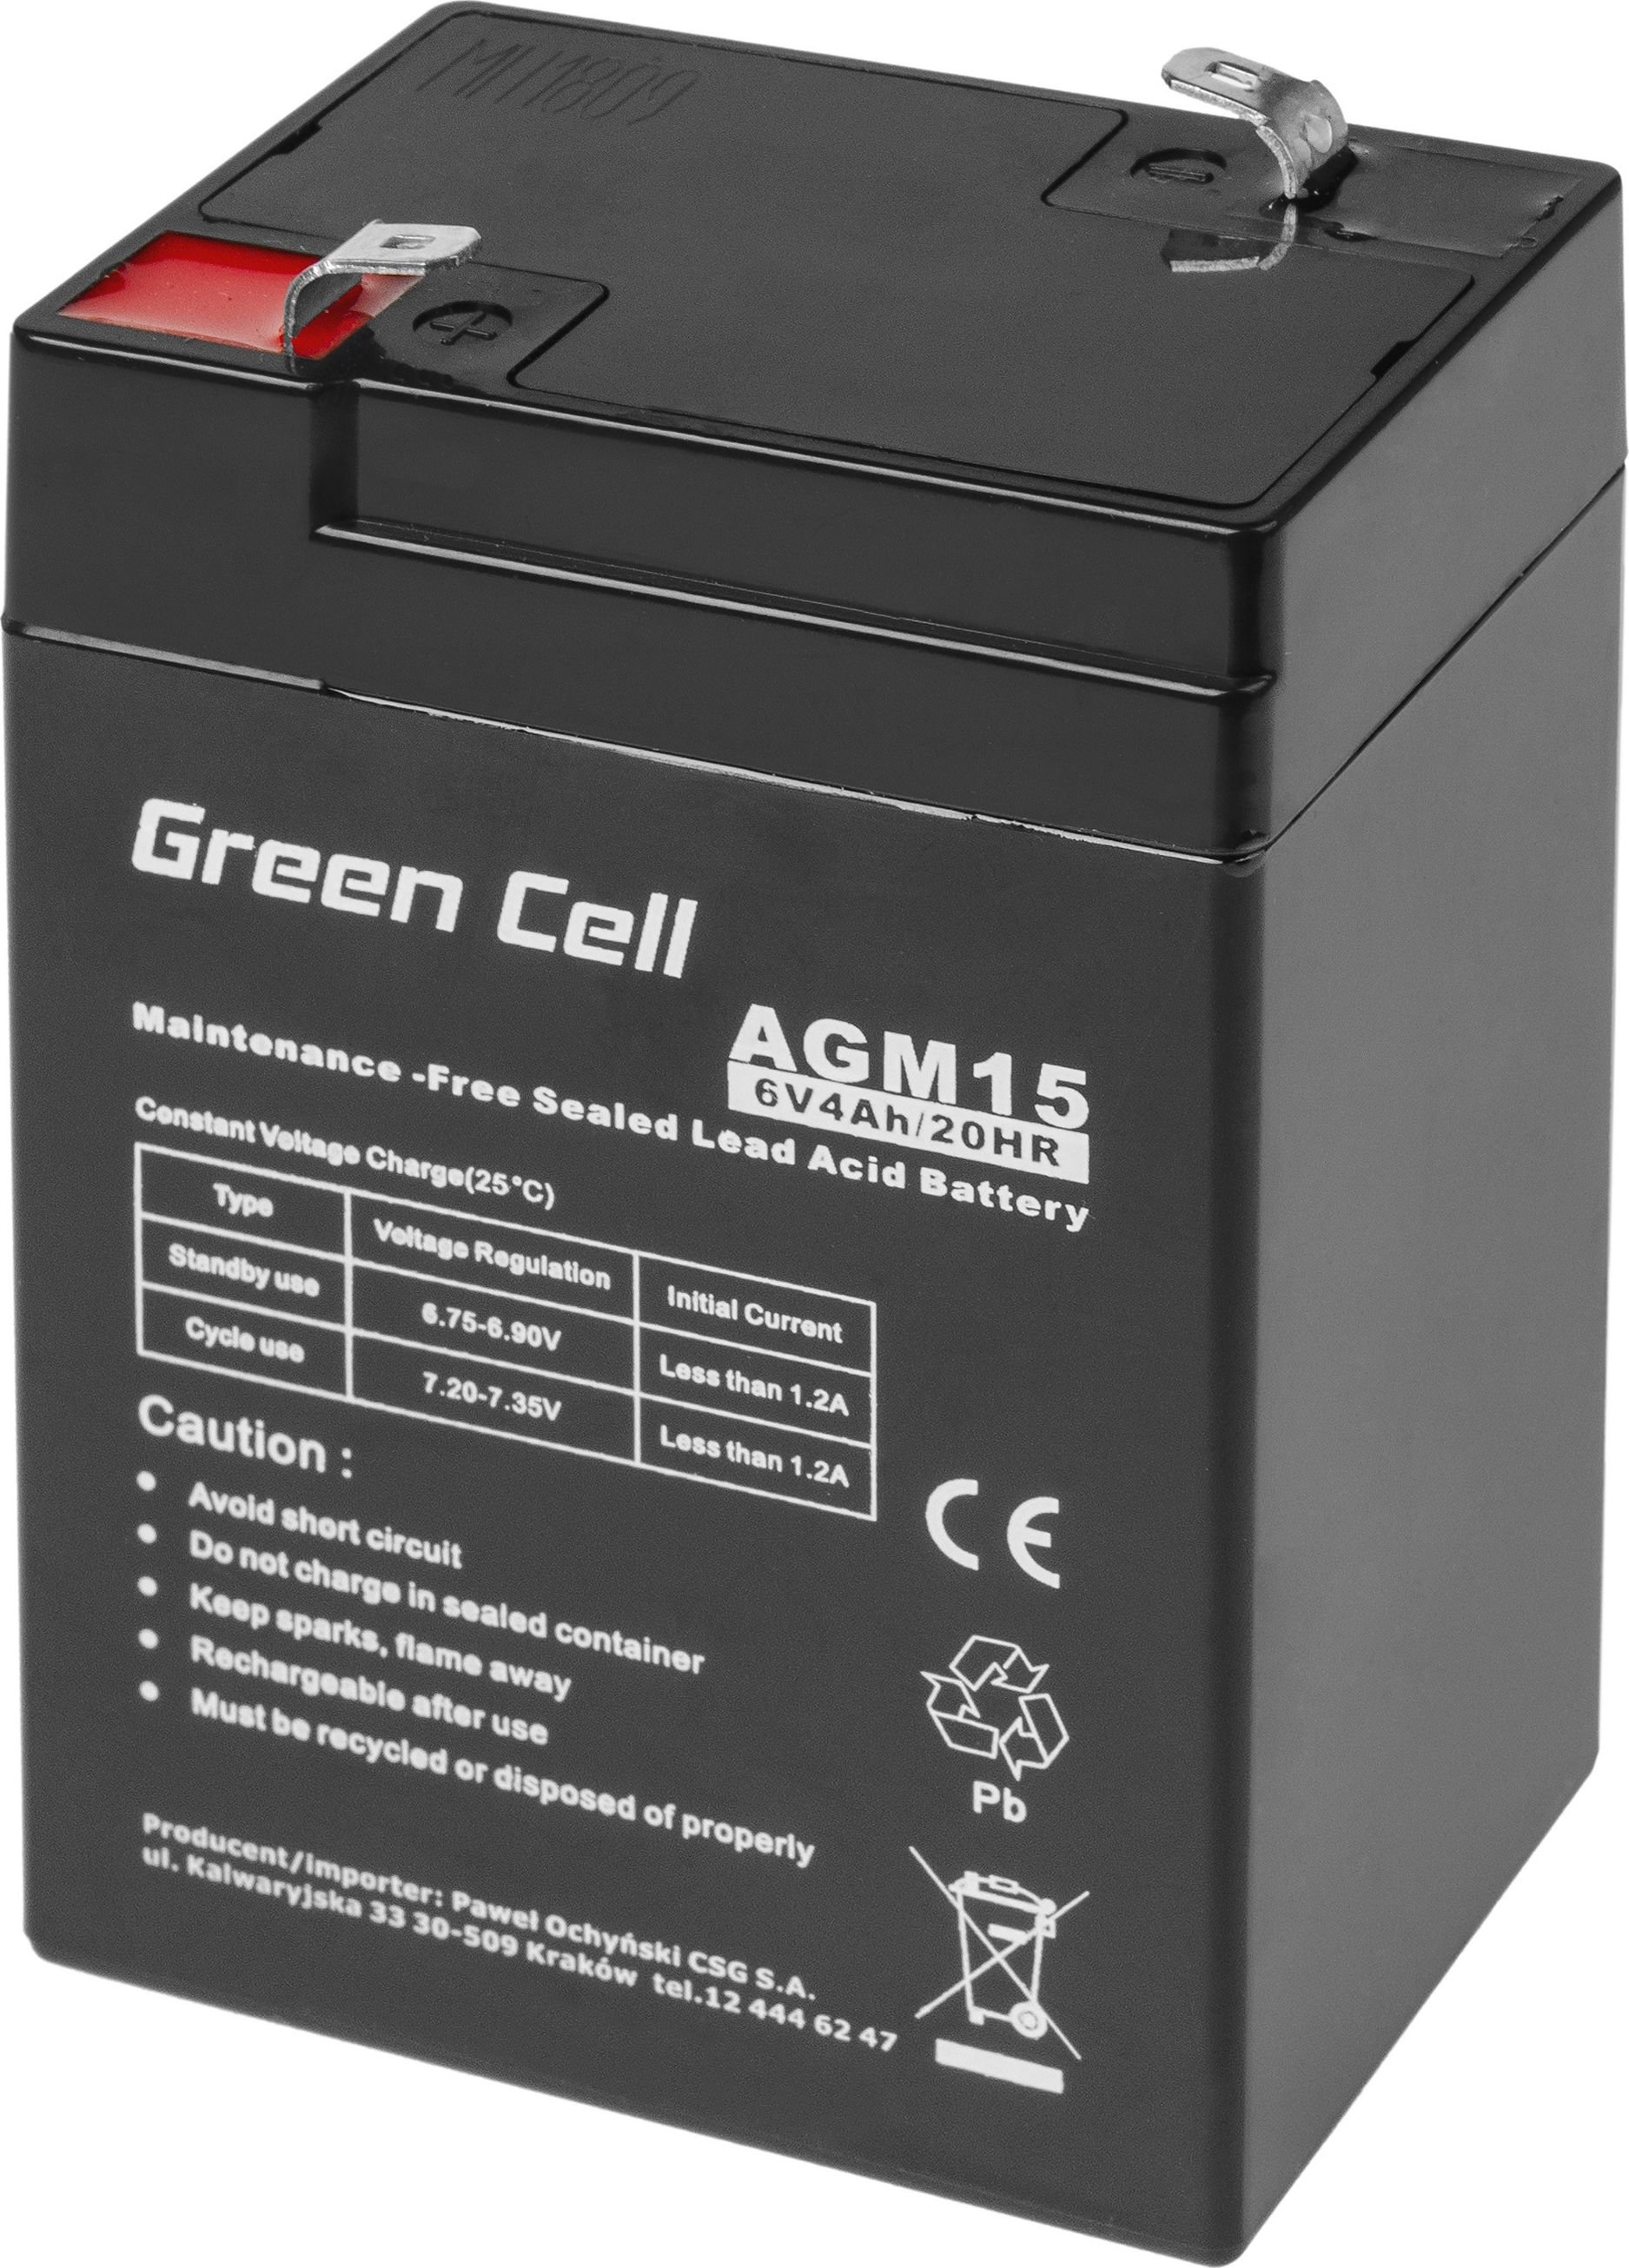 Acumulator stationar AGM 6V 4Ah VRLA plum acid baterie fara mentenanta jucarii sisteme de alarma Green Cell